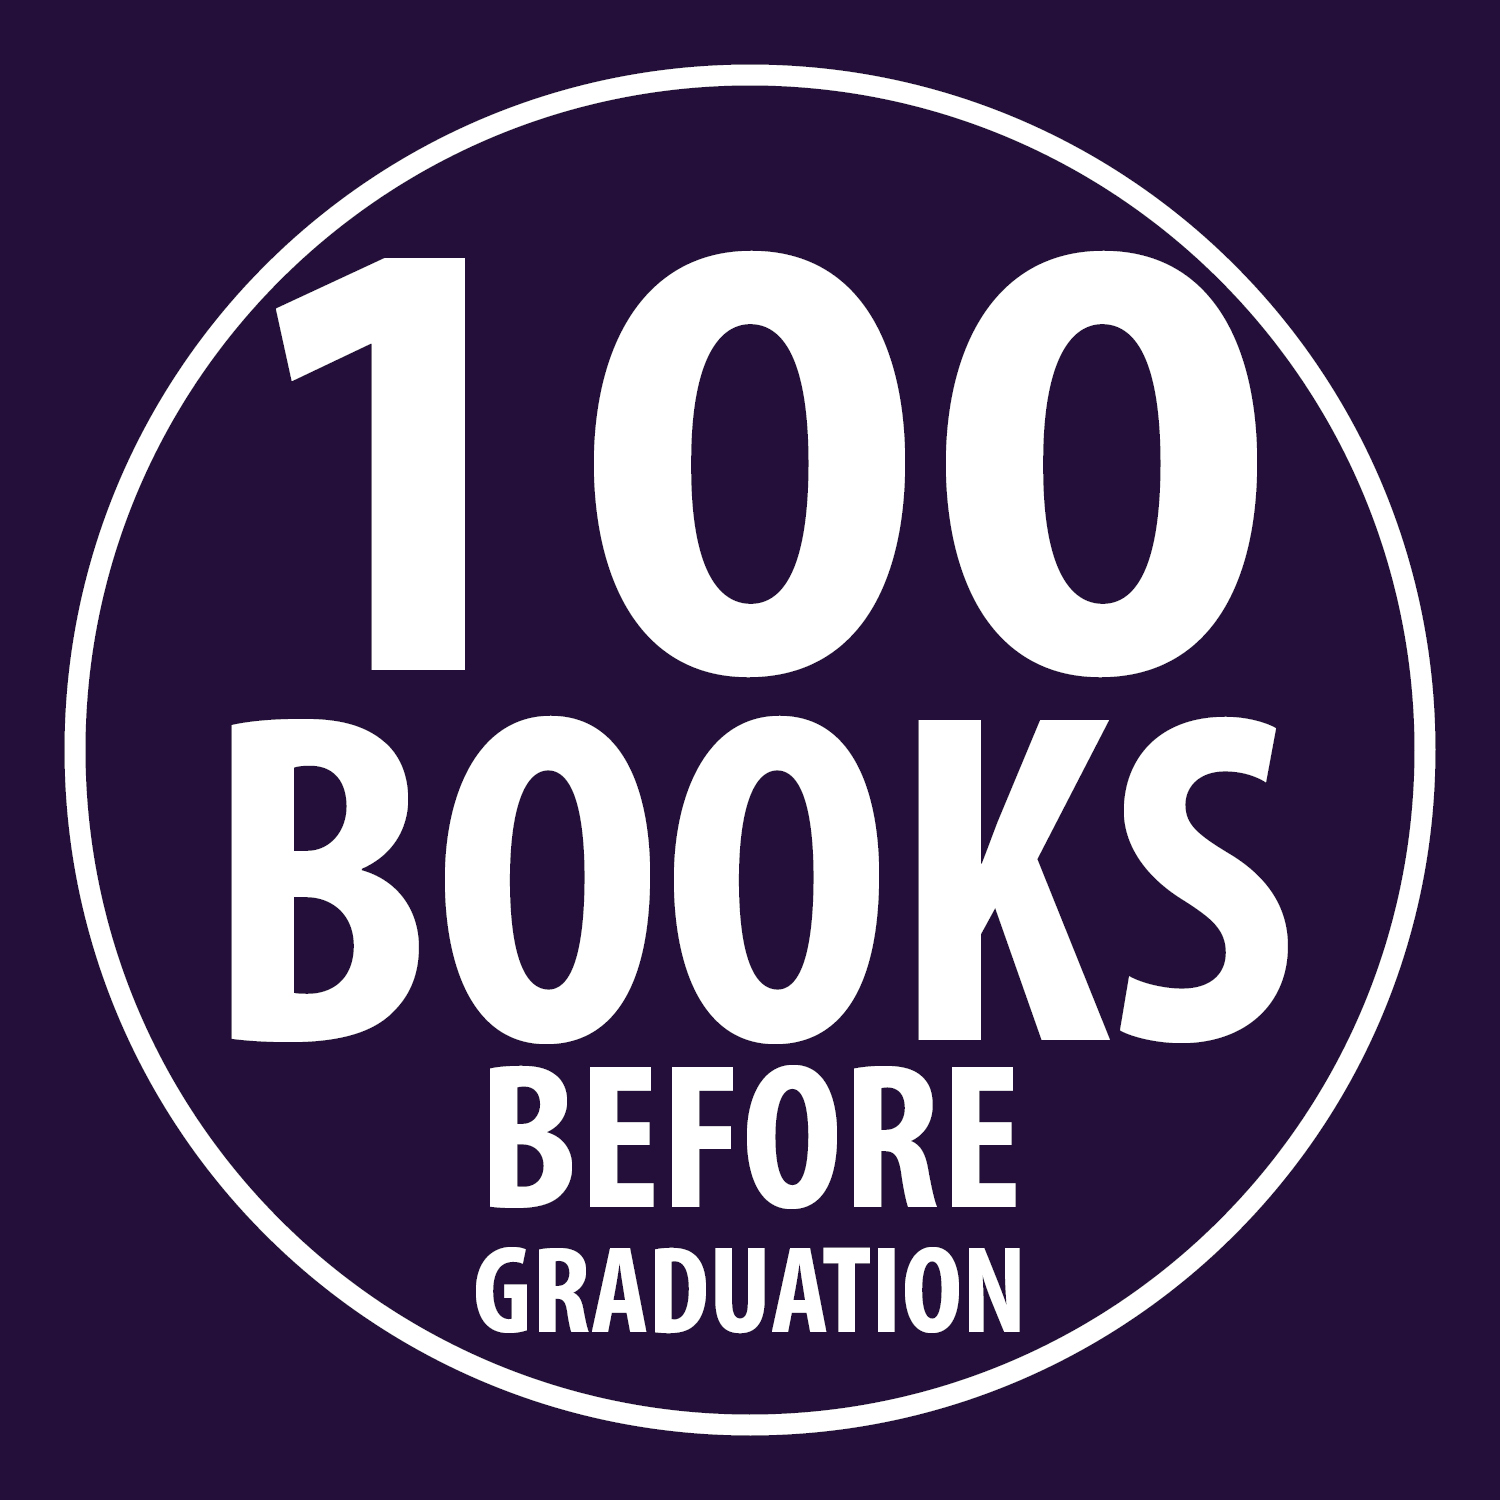 100 Books Before Graduation